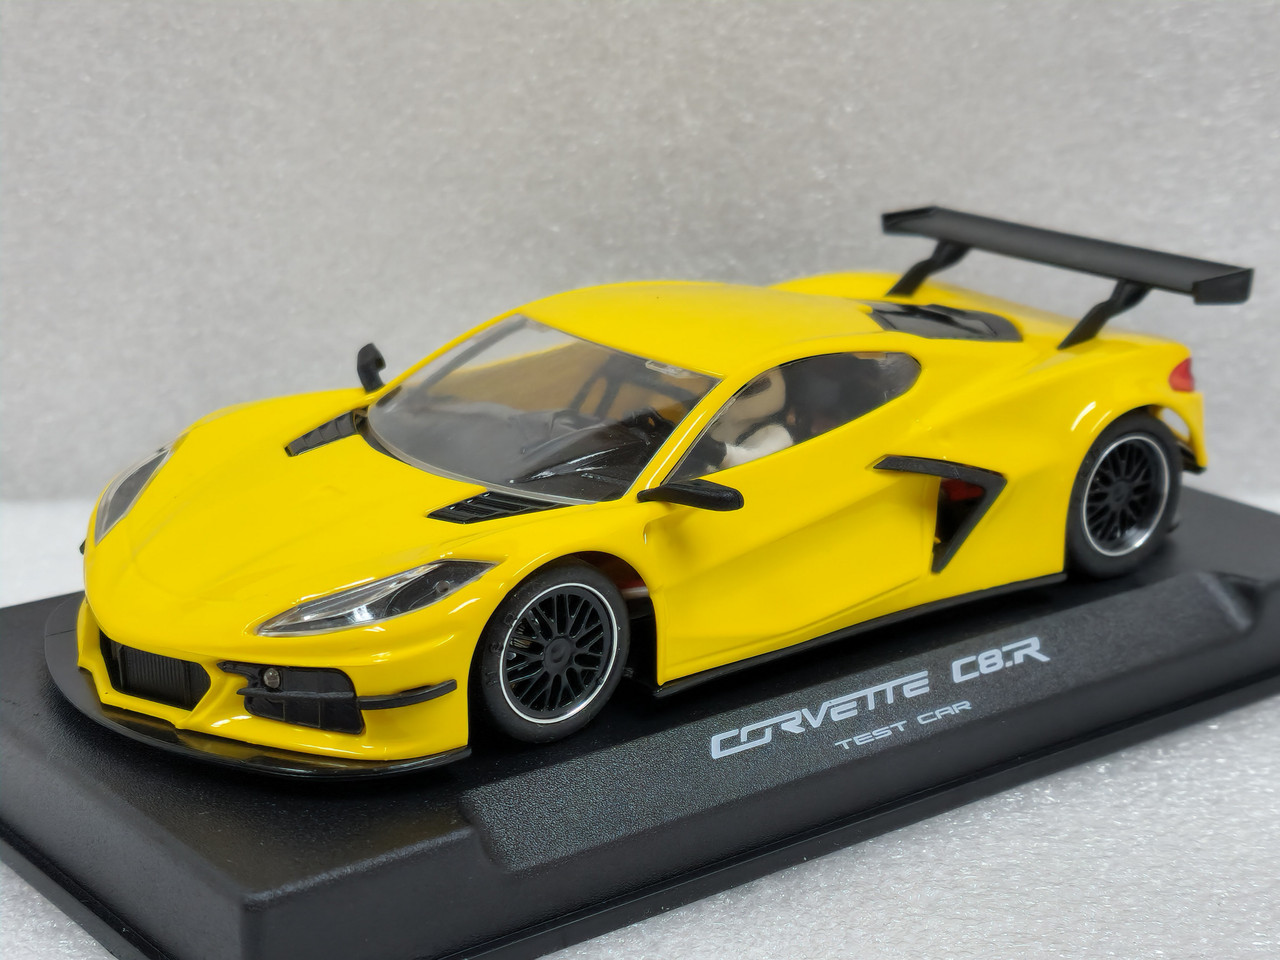 0395AW NSR Corvette C8R Test Car Yellow 1:32 Slot Car - Great 